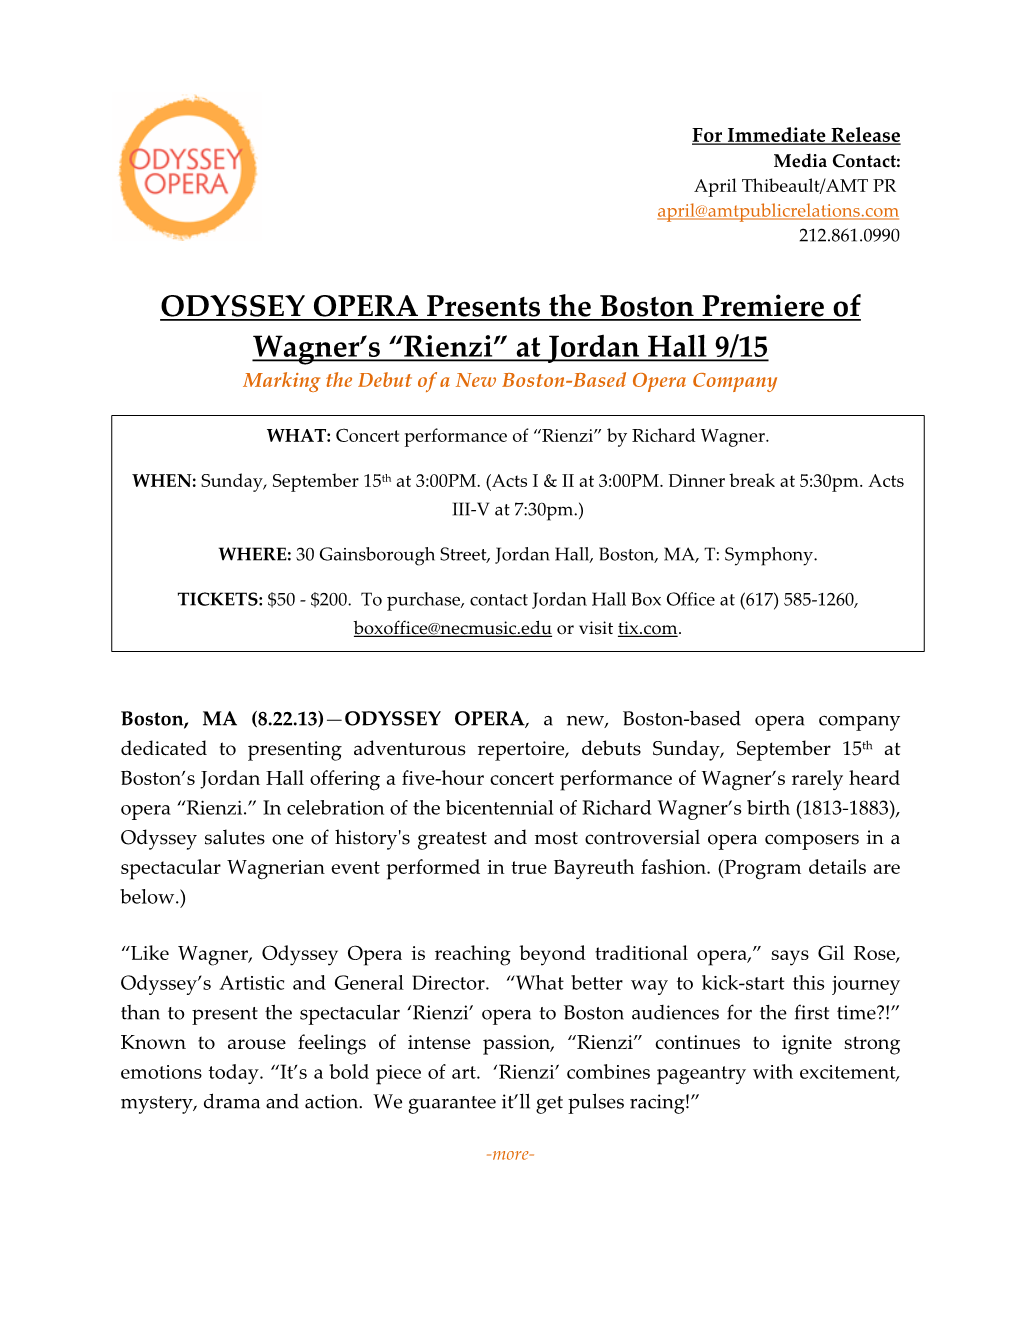 Rienzi” at Jordan Hall 9/15 Marking the Debut of a New Boston-Based Opera Company